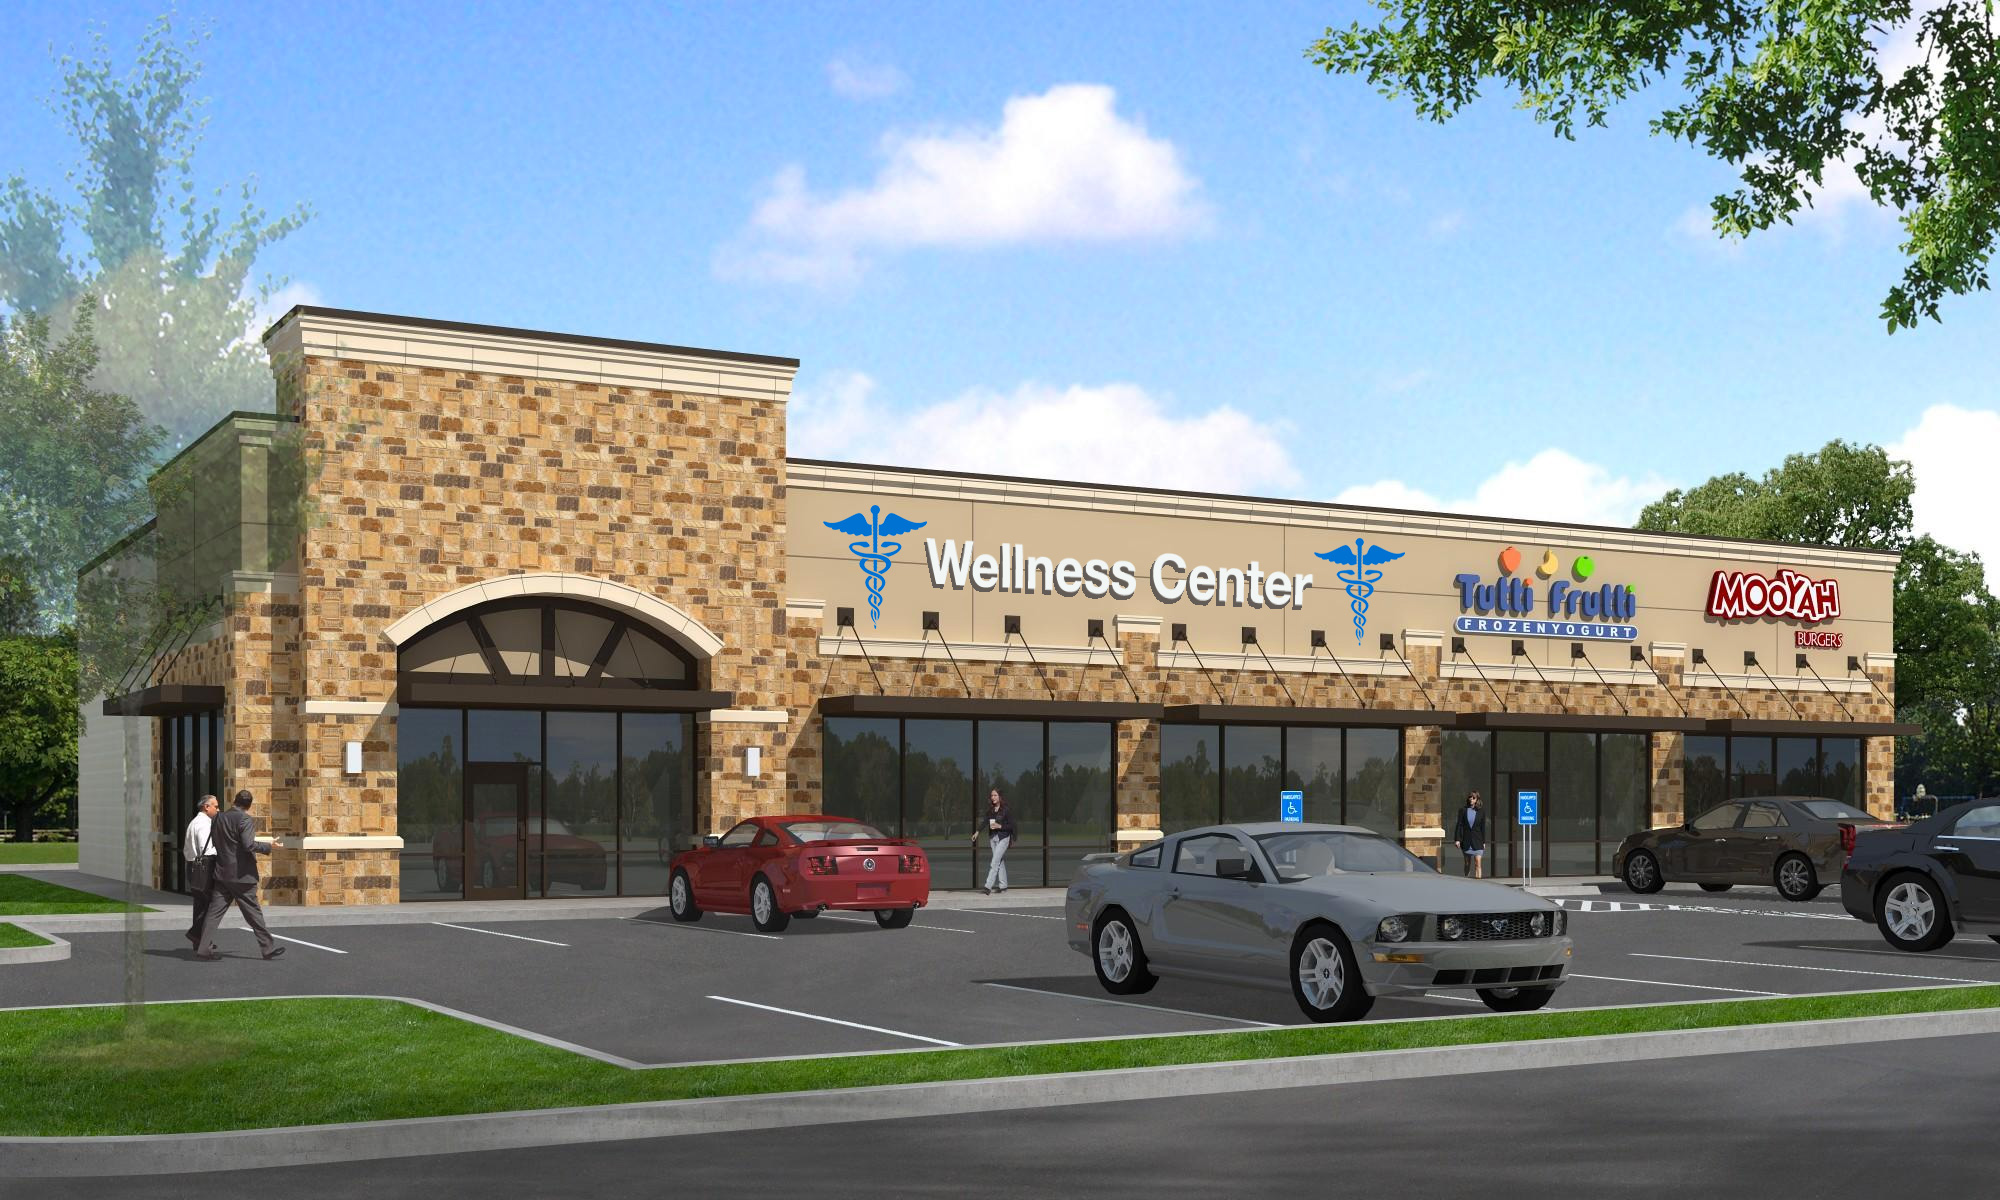 Retail Strip Centers as Local Wellness Centers